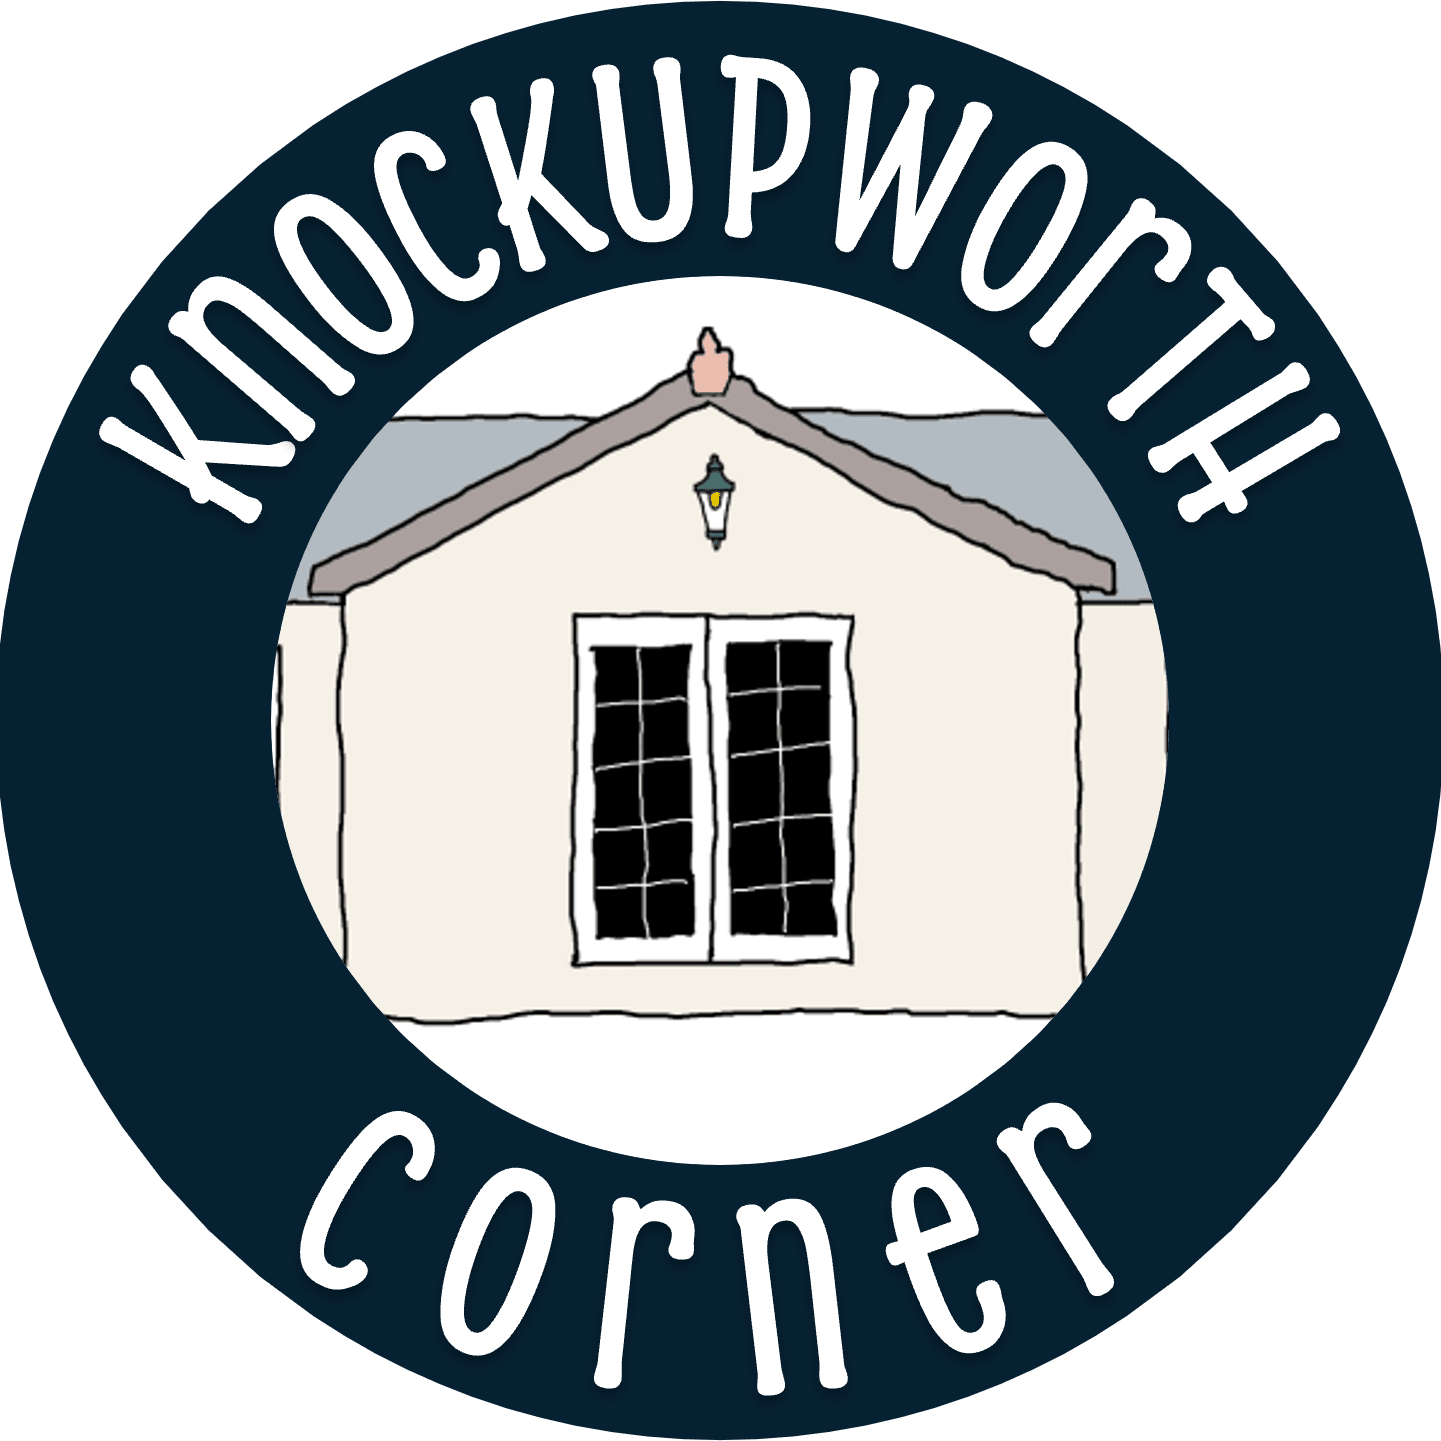 Knockupworth Corner logo